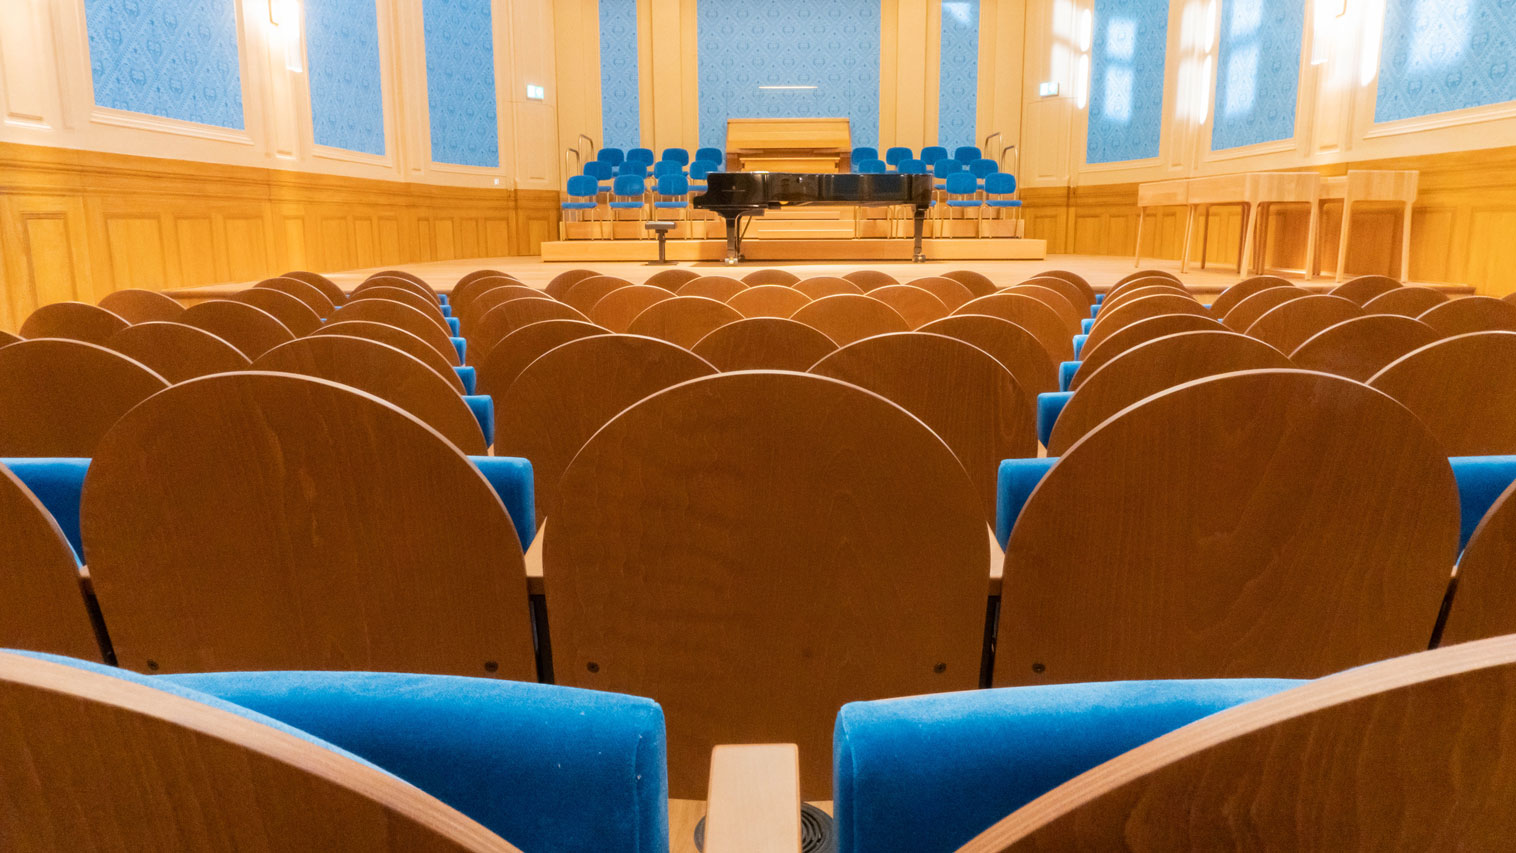 Geneve Conservatory of Music